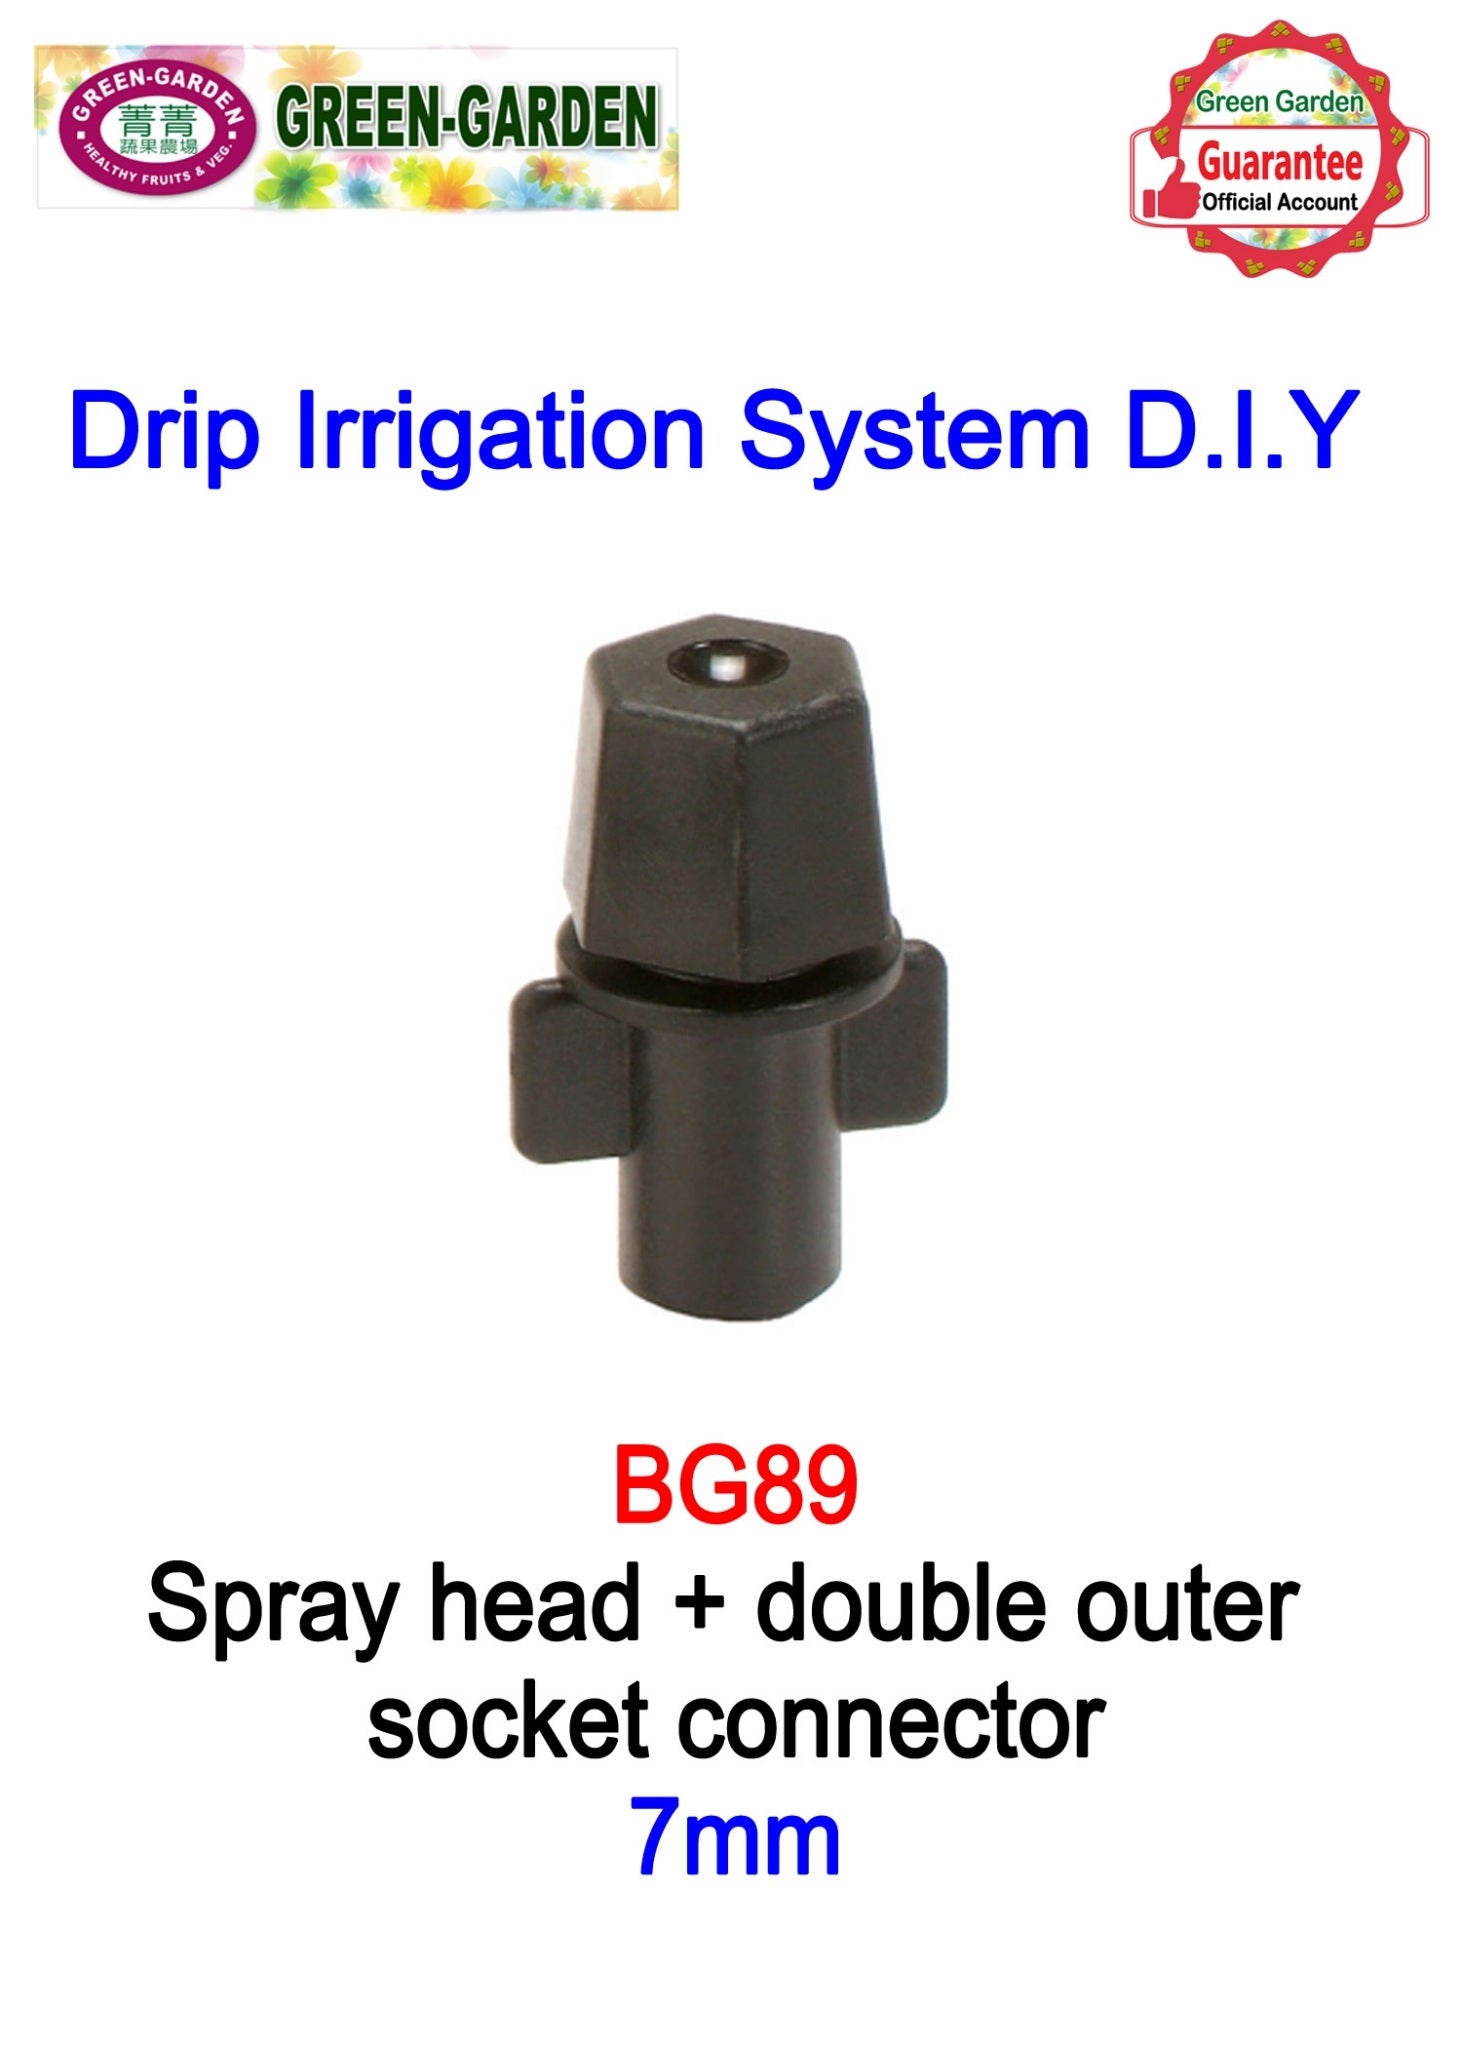 Drip Irrigation System - One-way spray head +ND-5146 BG89